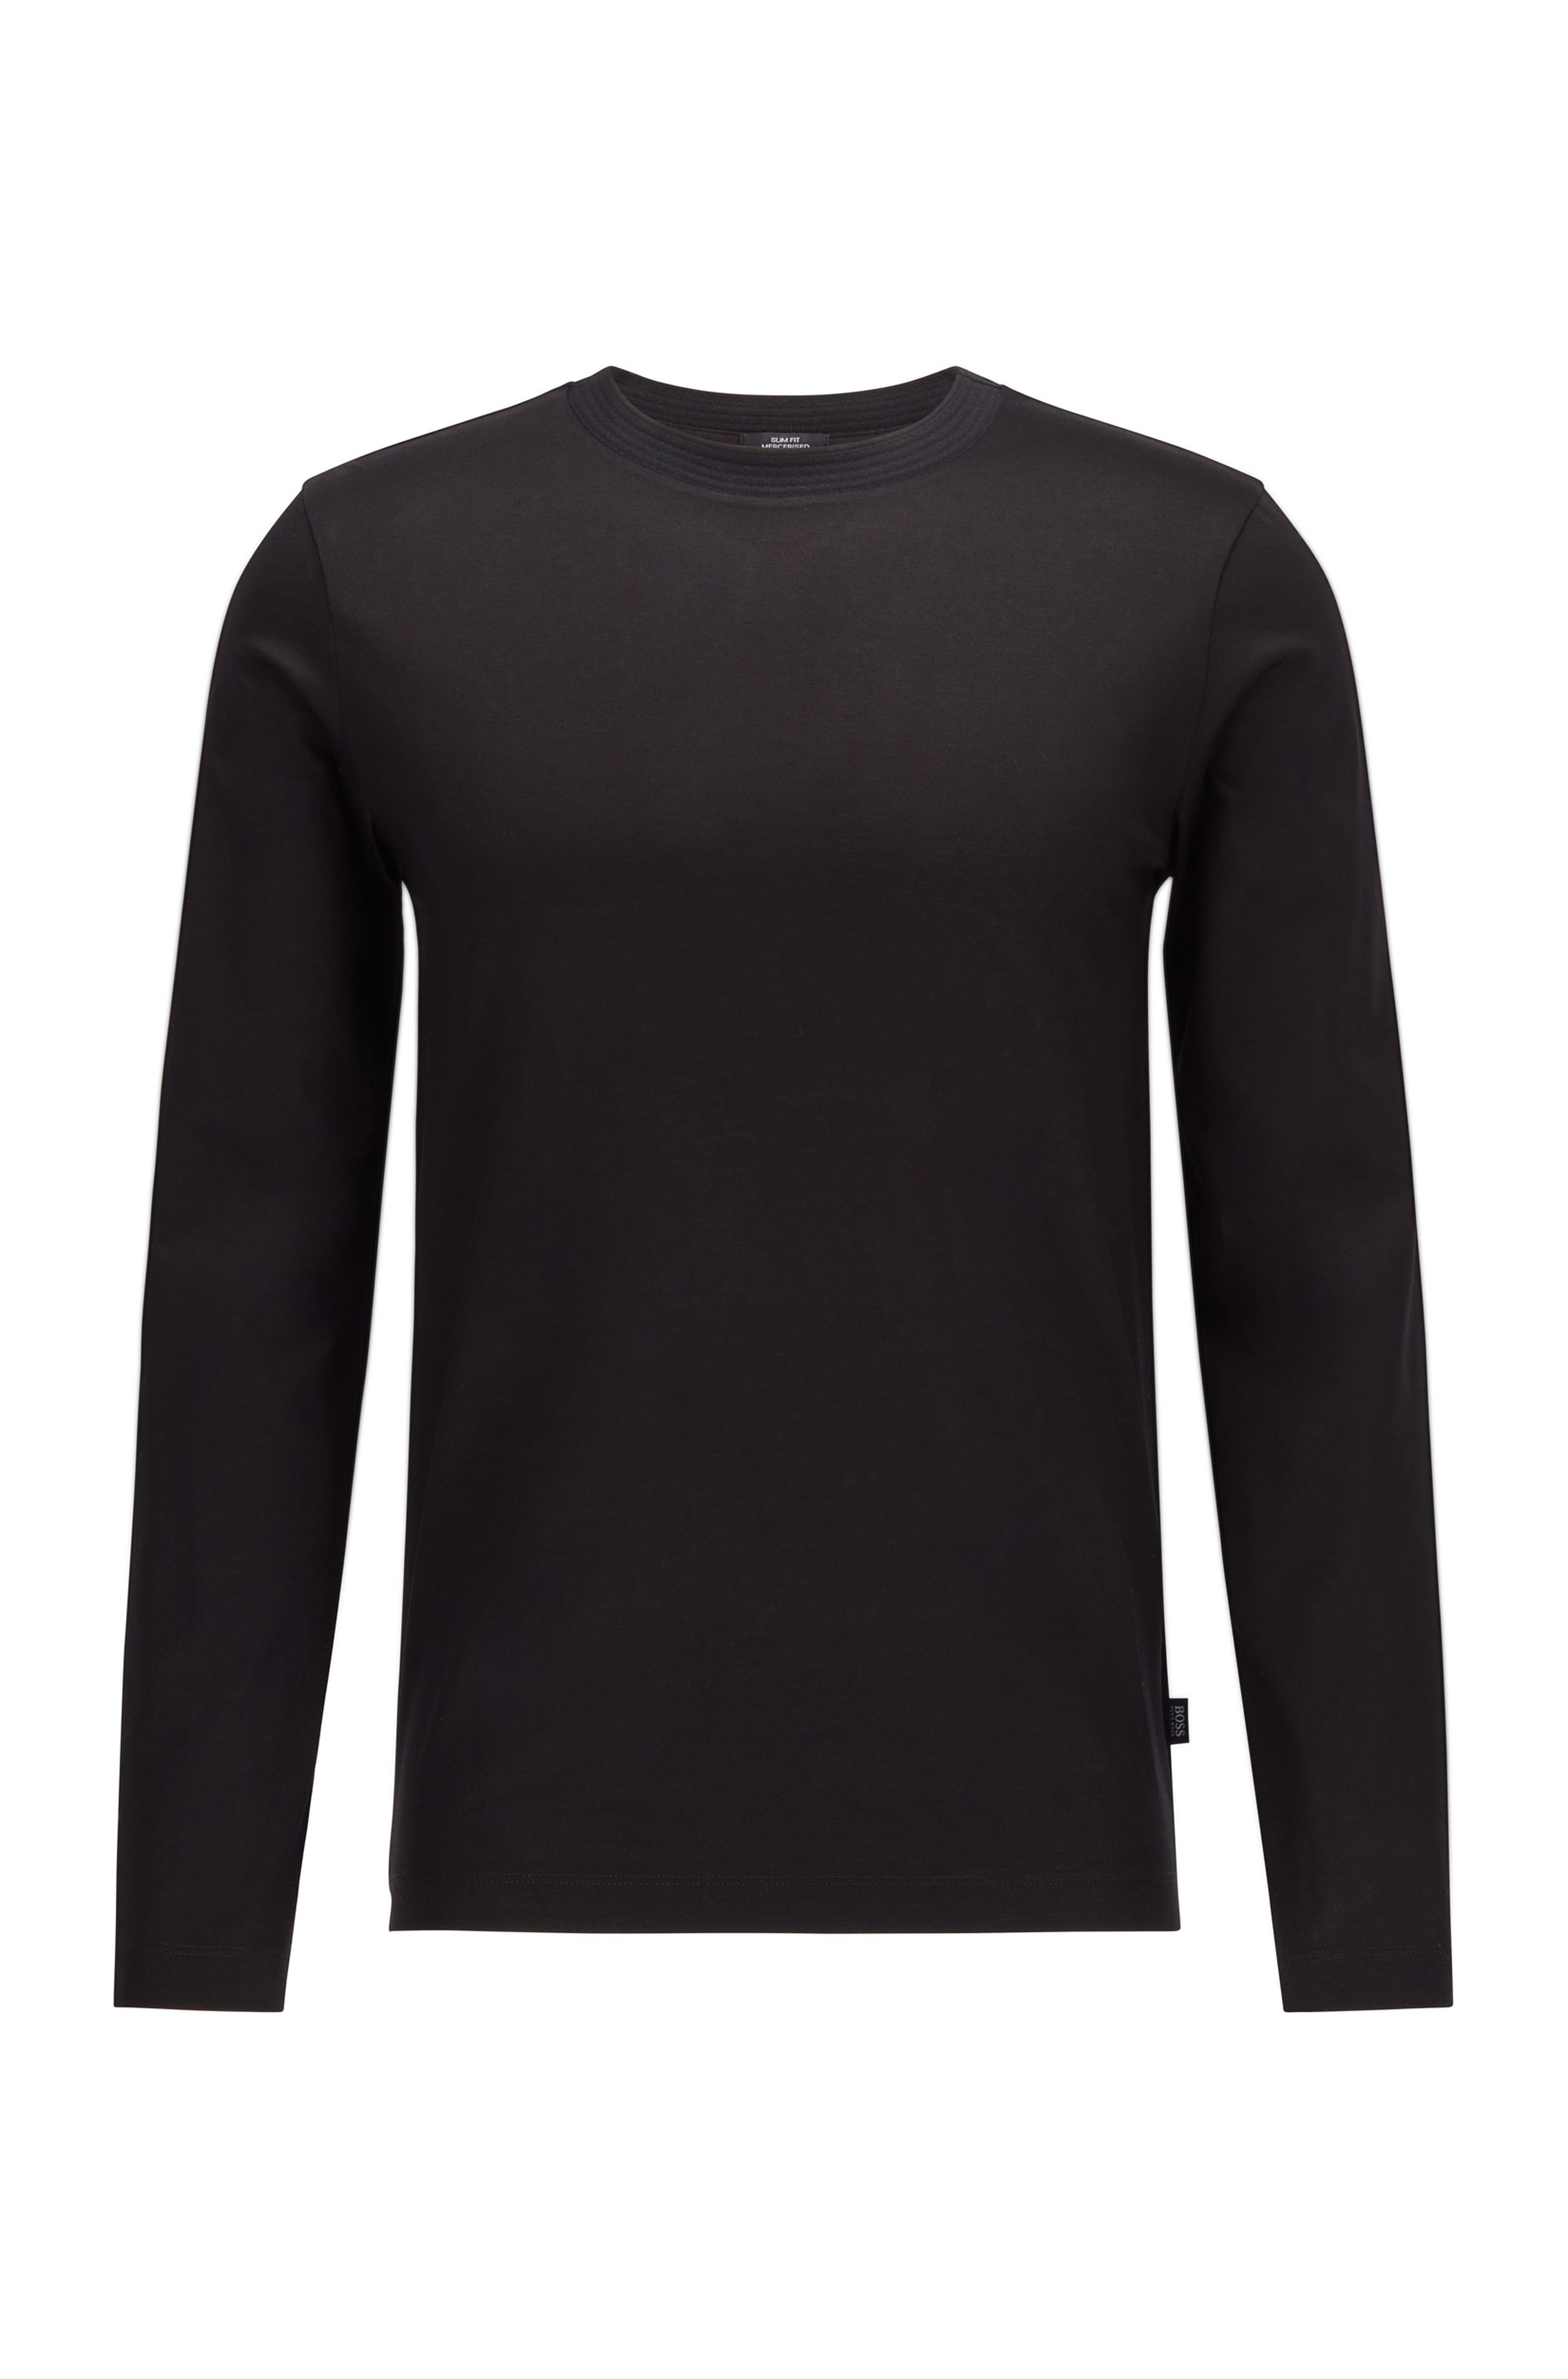 Slim-fit long-sleeved T-shirt in mercerized cotton, Black